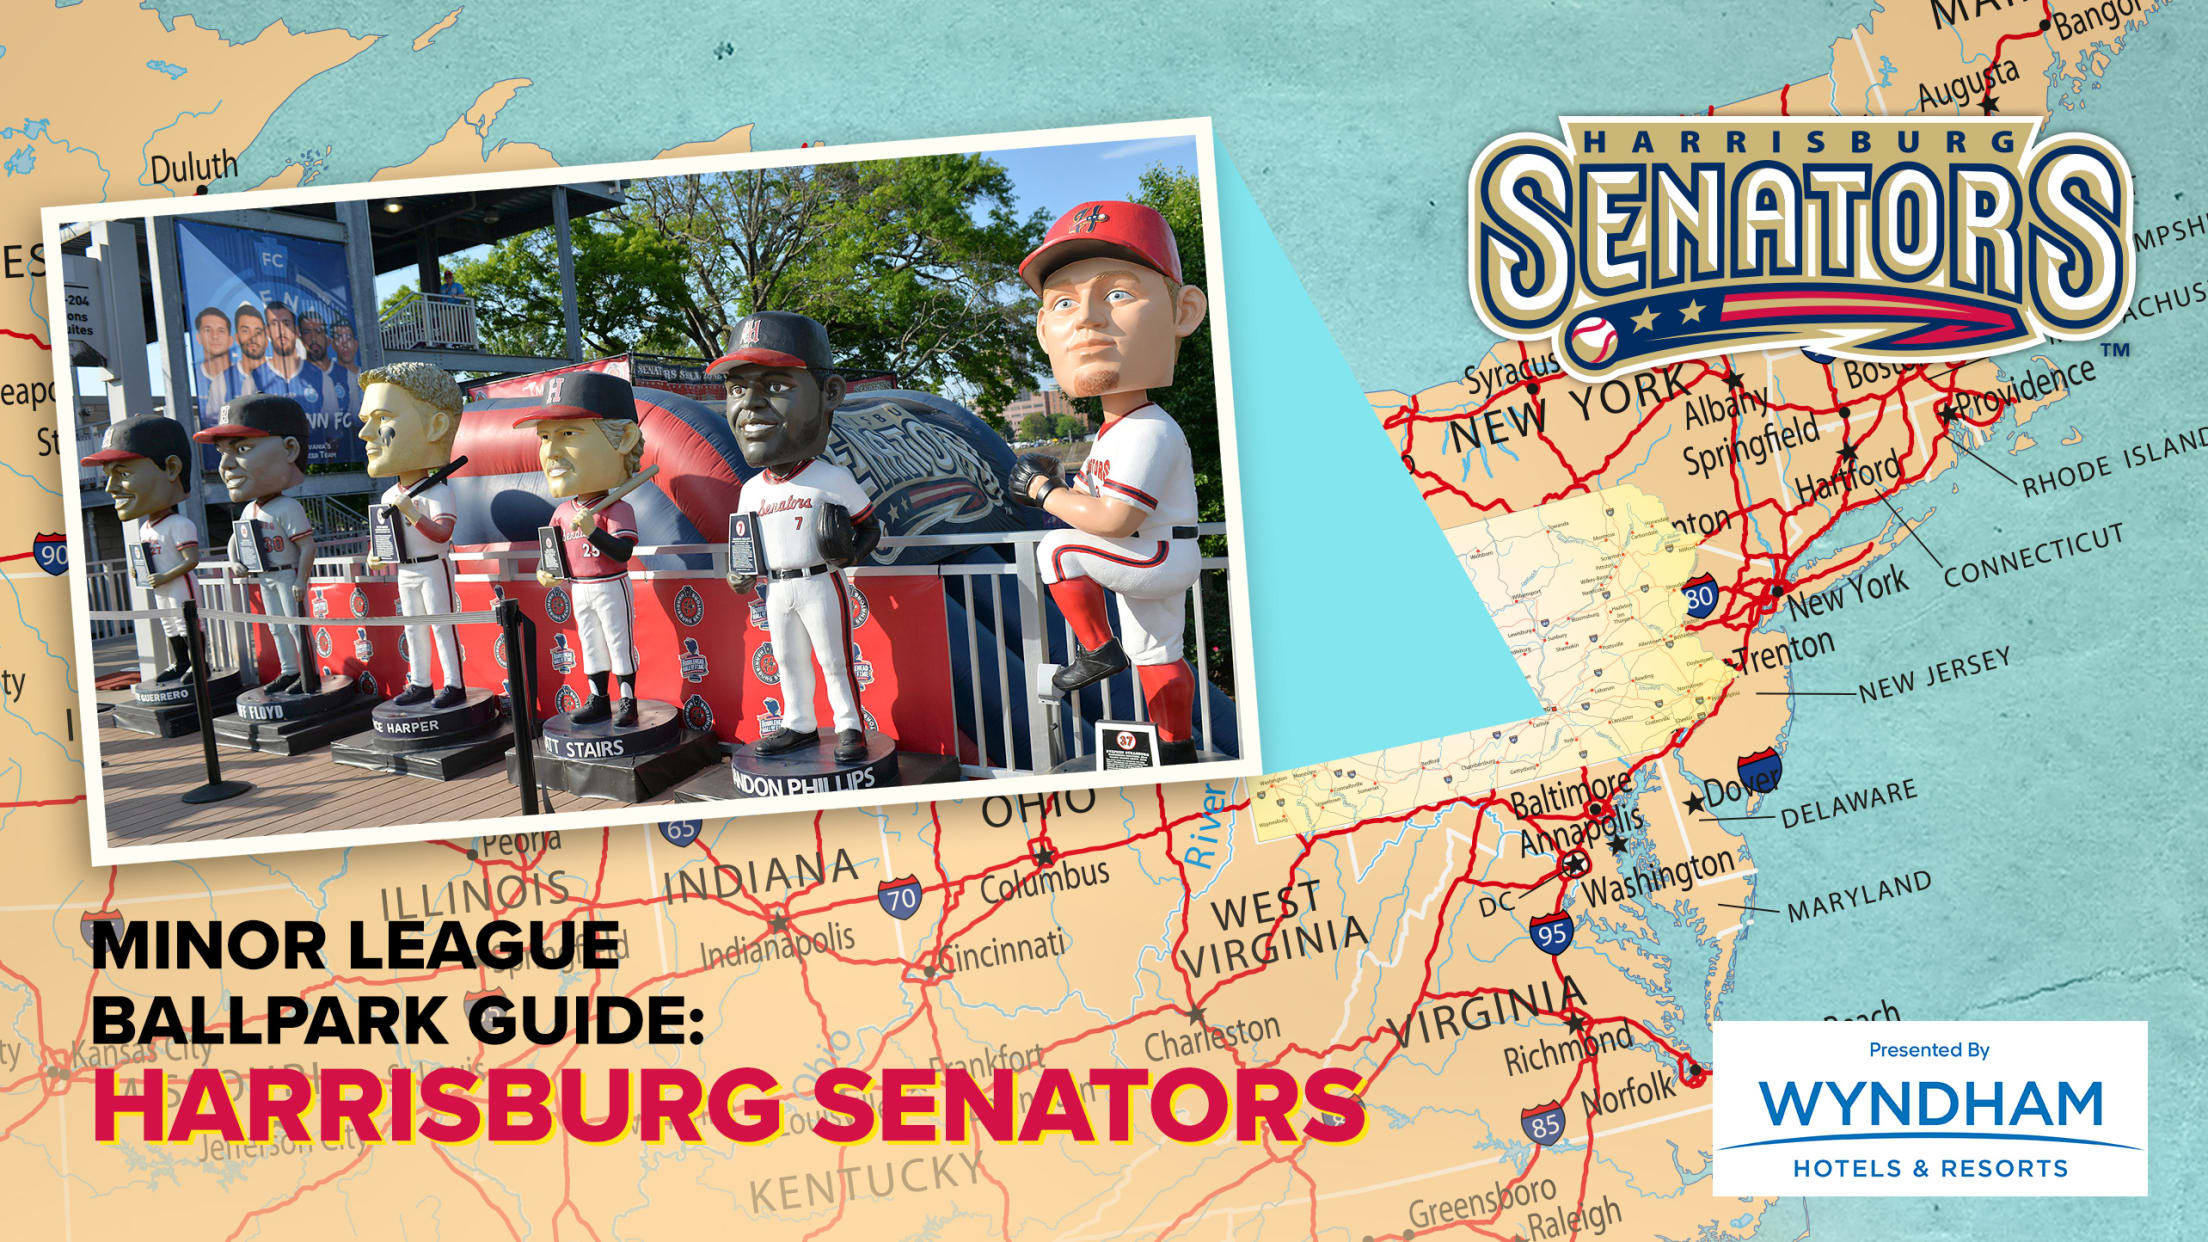 Harrisburg Senators host Reading Fightin' Phils this weekend